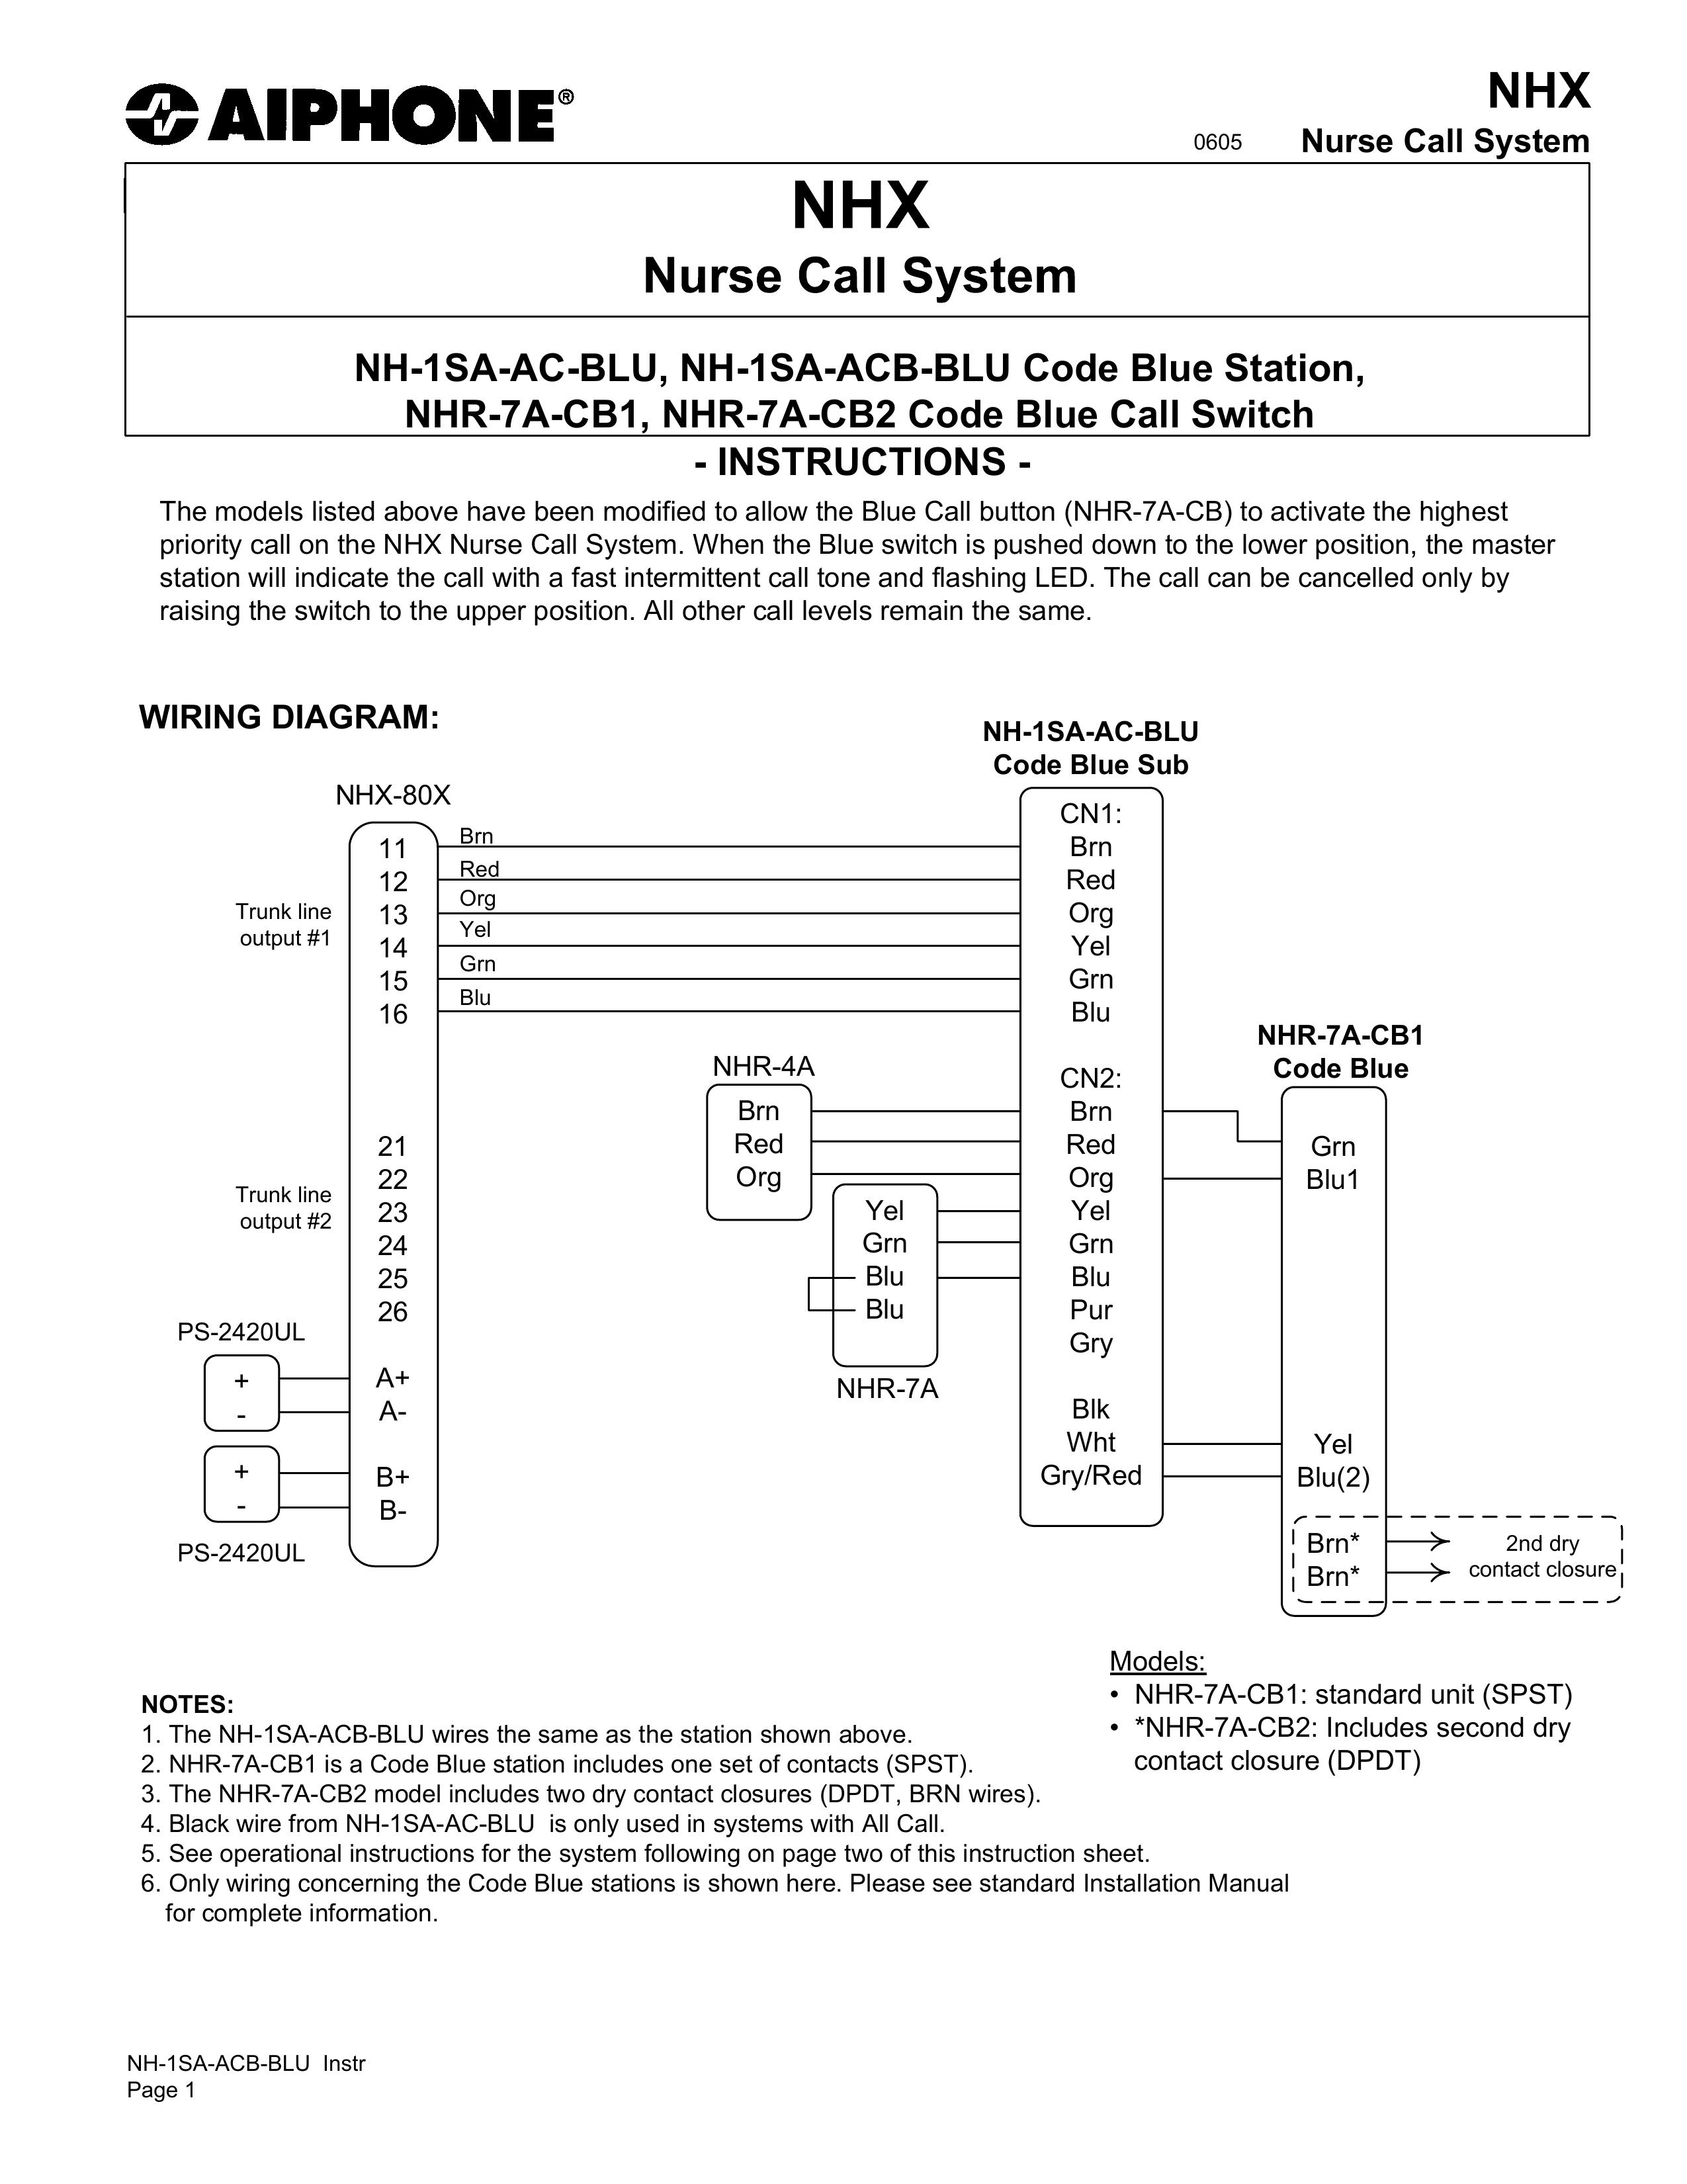 Aiphone NH-1SA-AC-BLU Medical Alarms User Manual